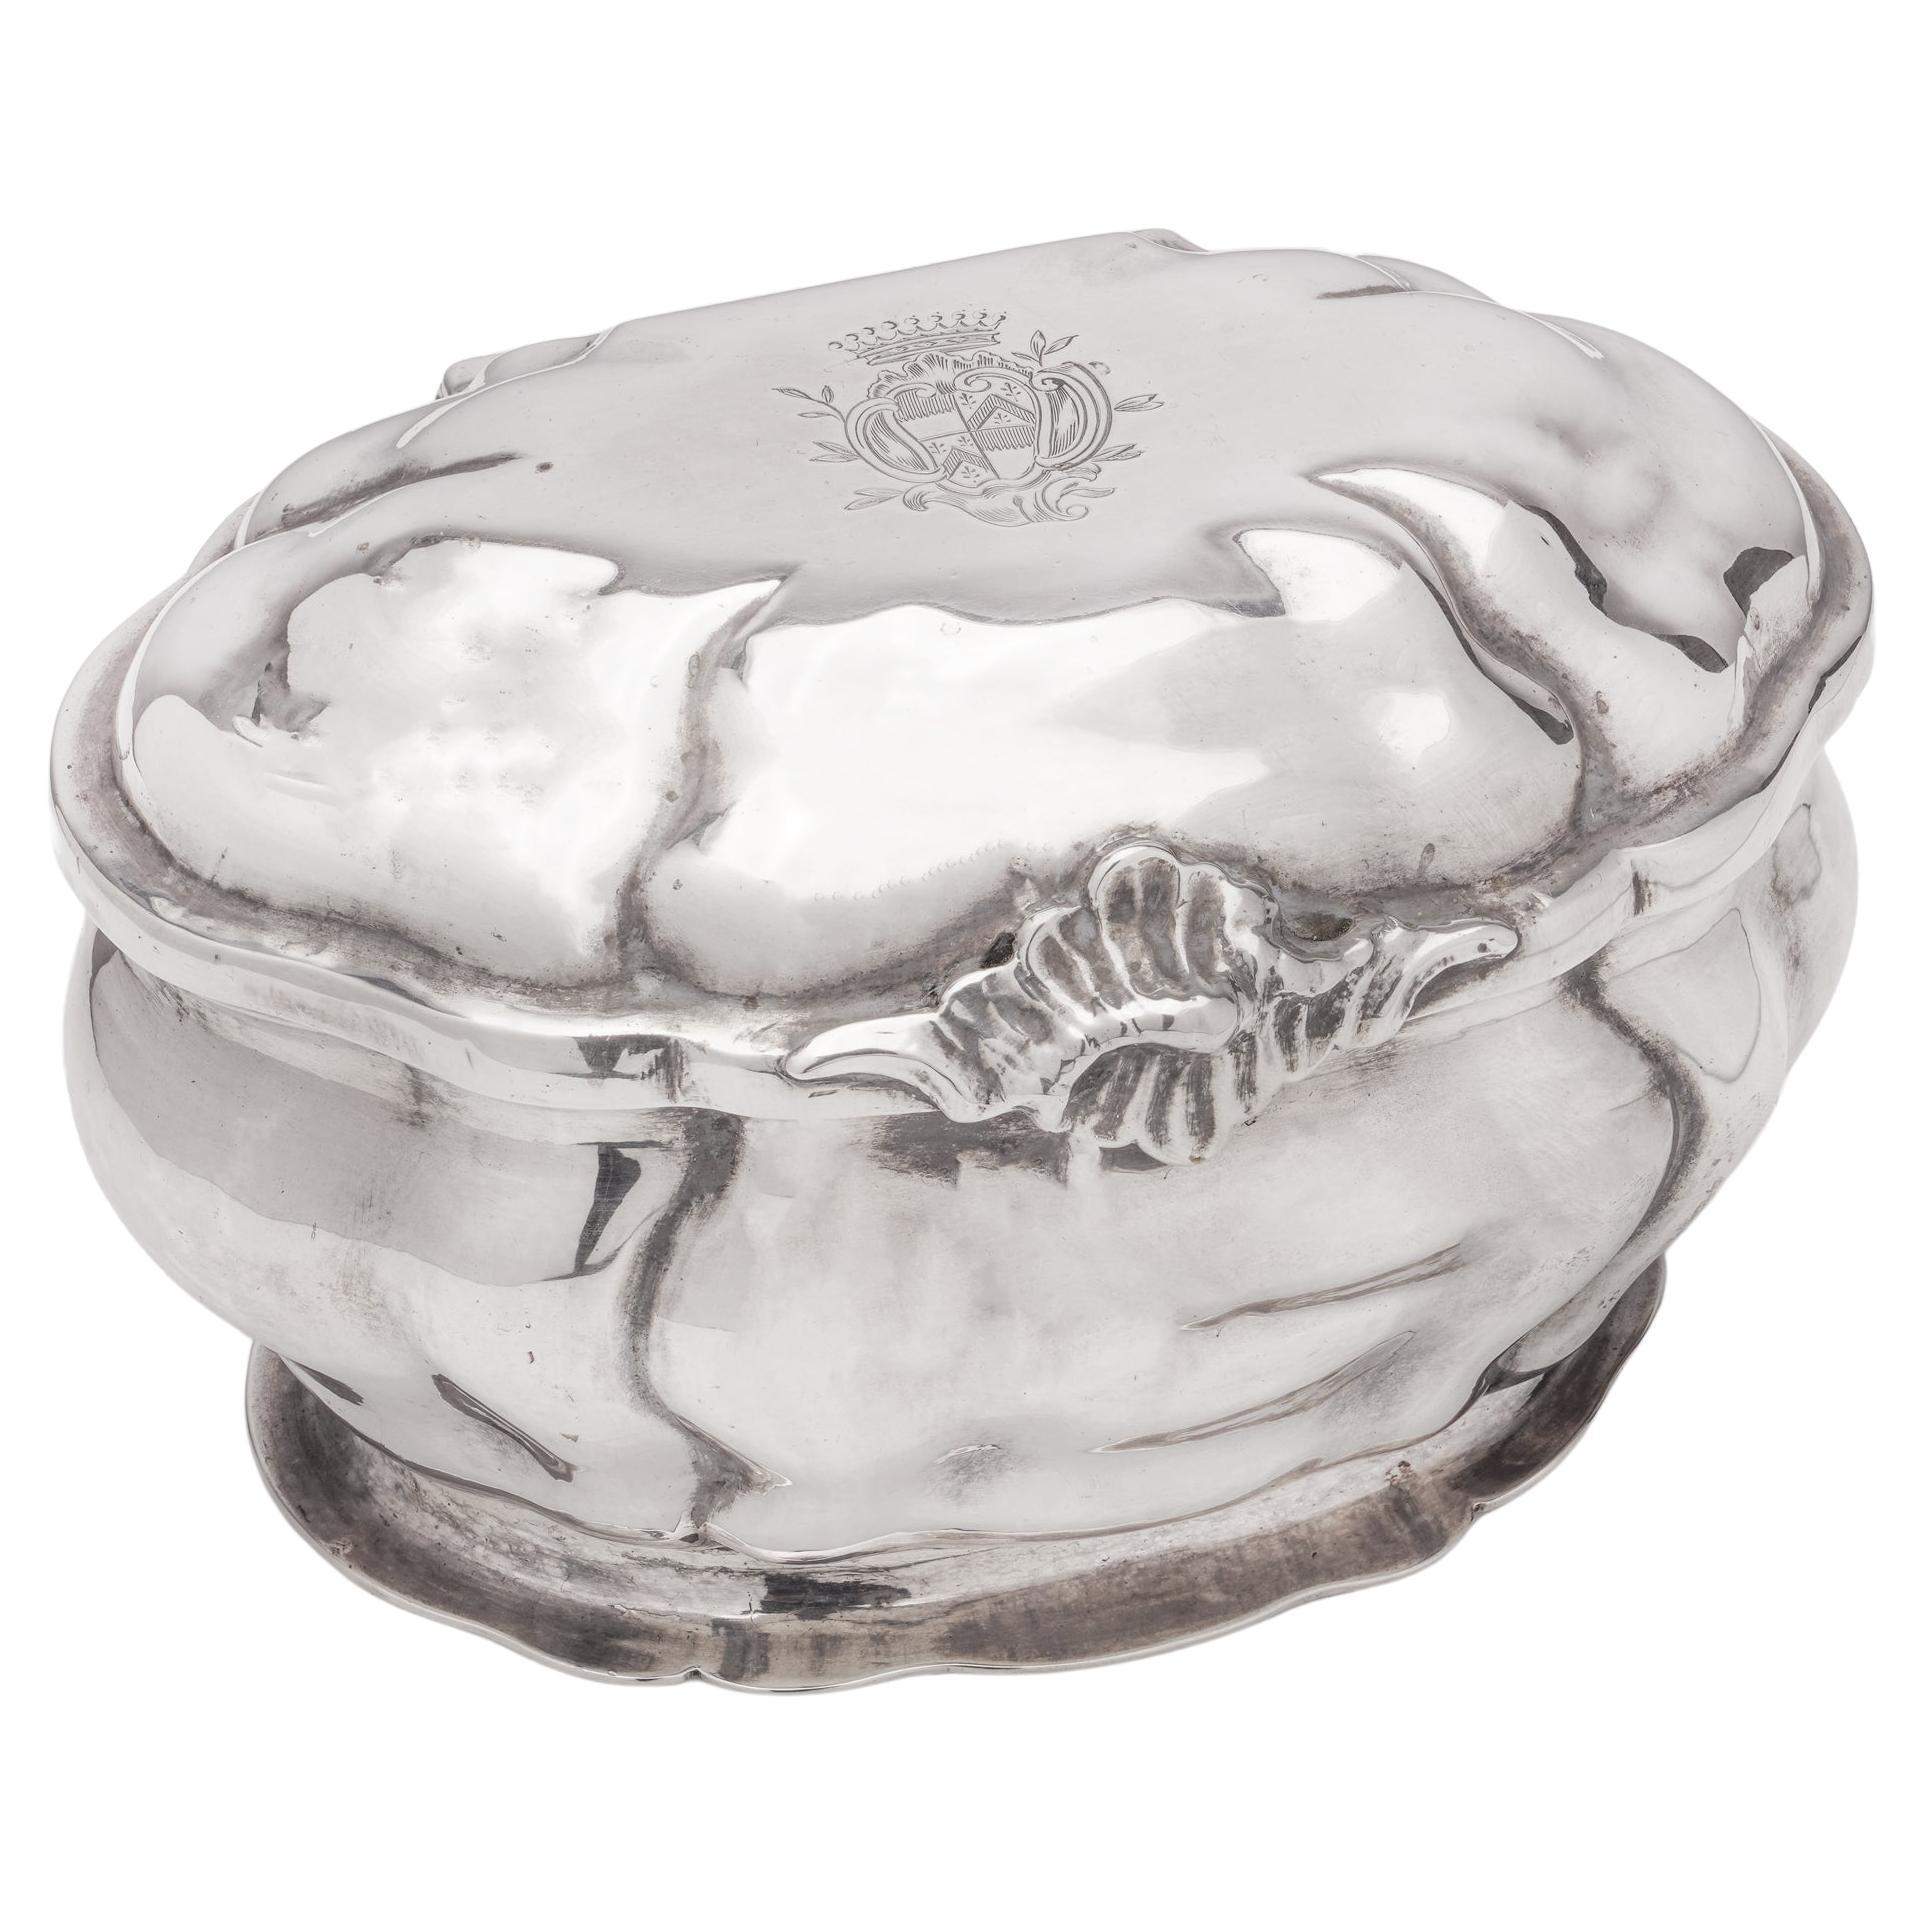 Antique 19th century 800. German silver small oval Tea Caddy with Hanau marks